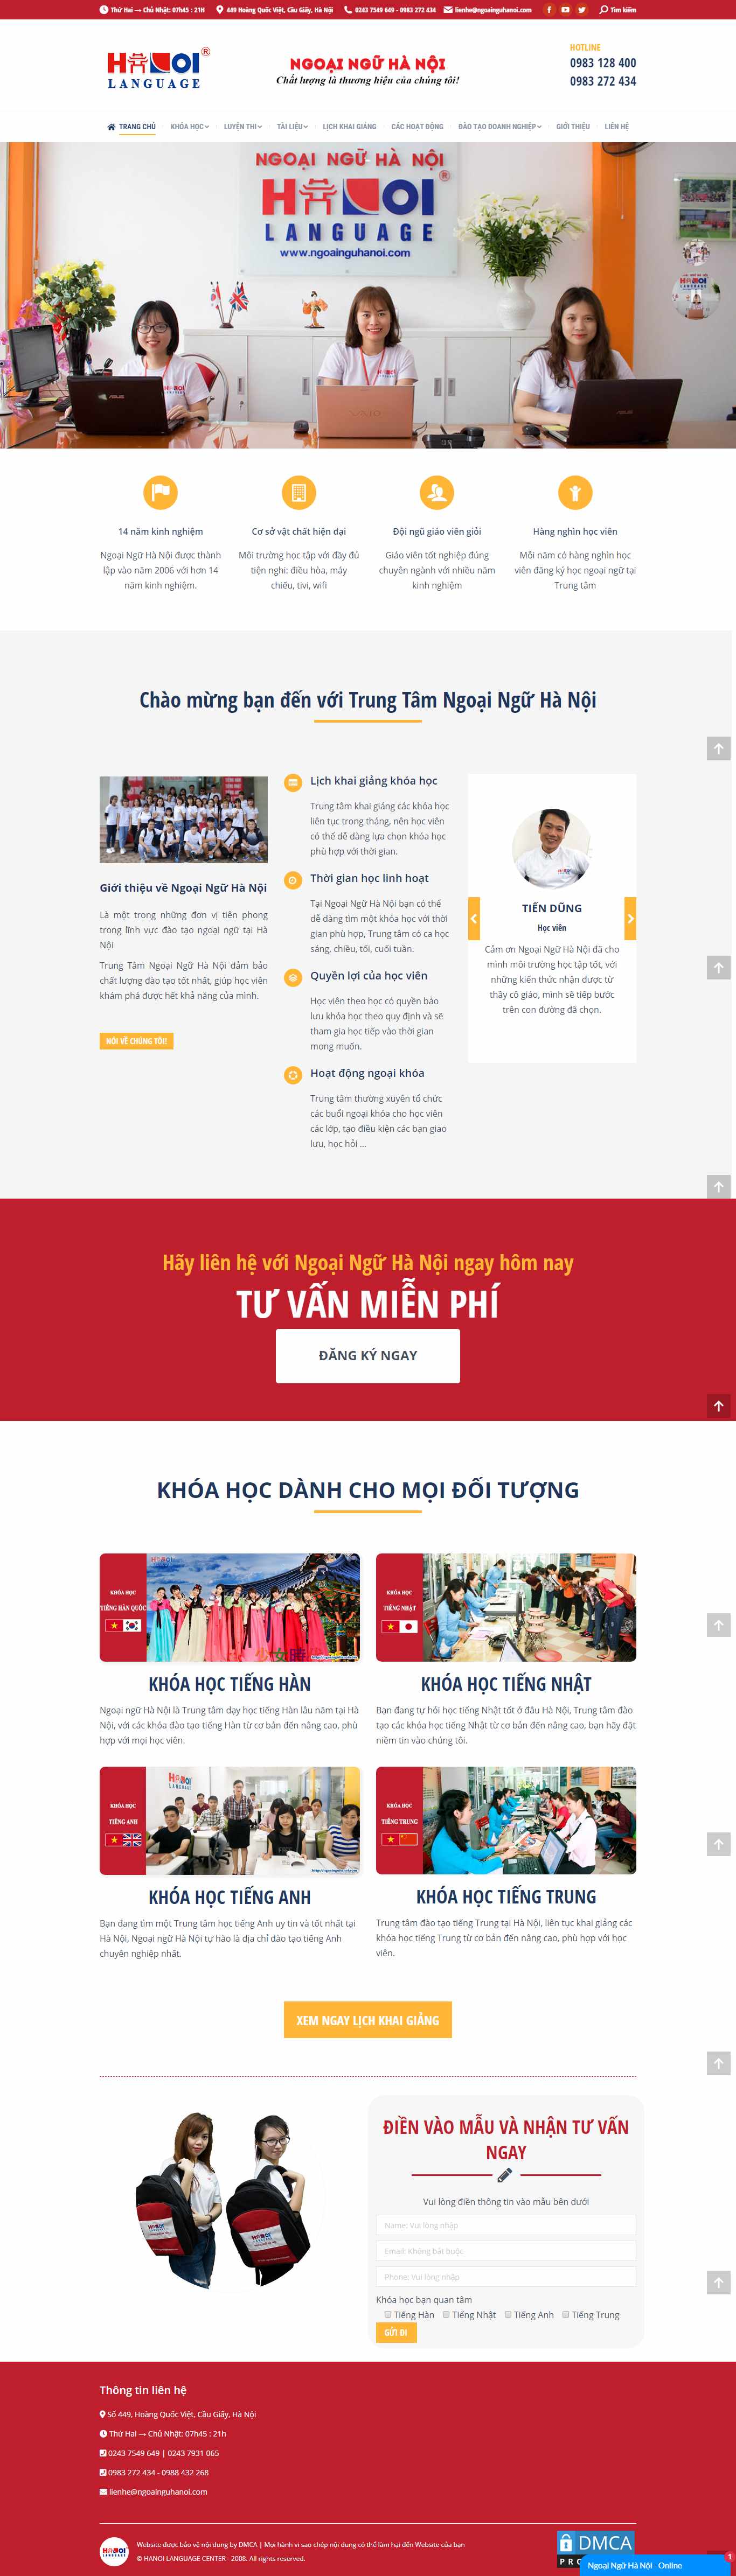 Thiết kế Website trung tâm anh ngữ - ngoainguhanoi.com